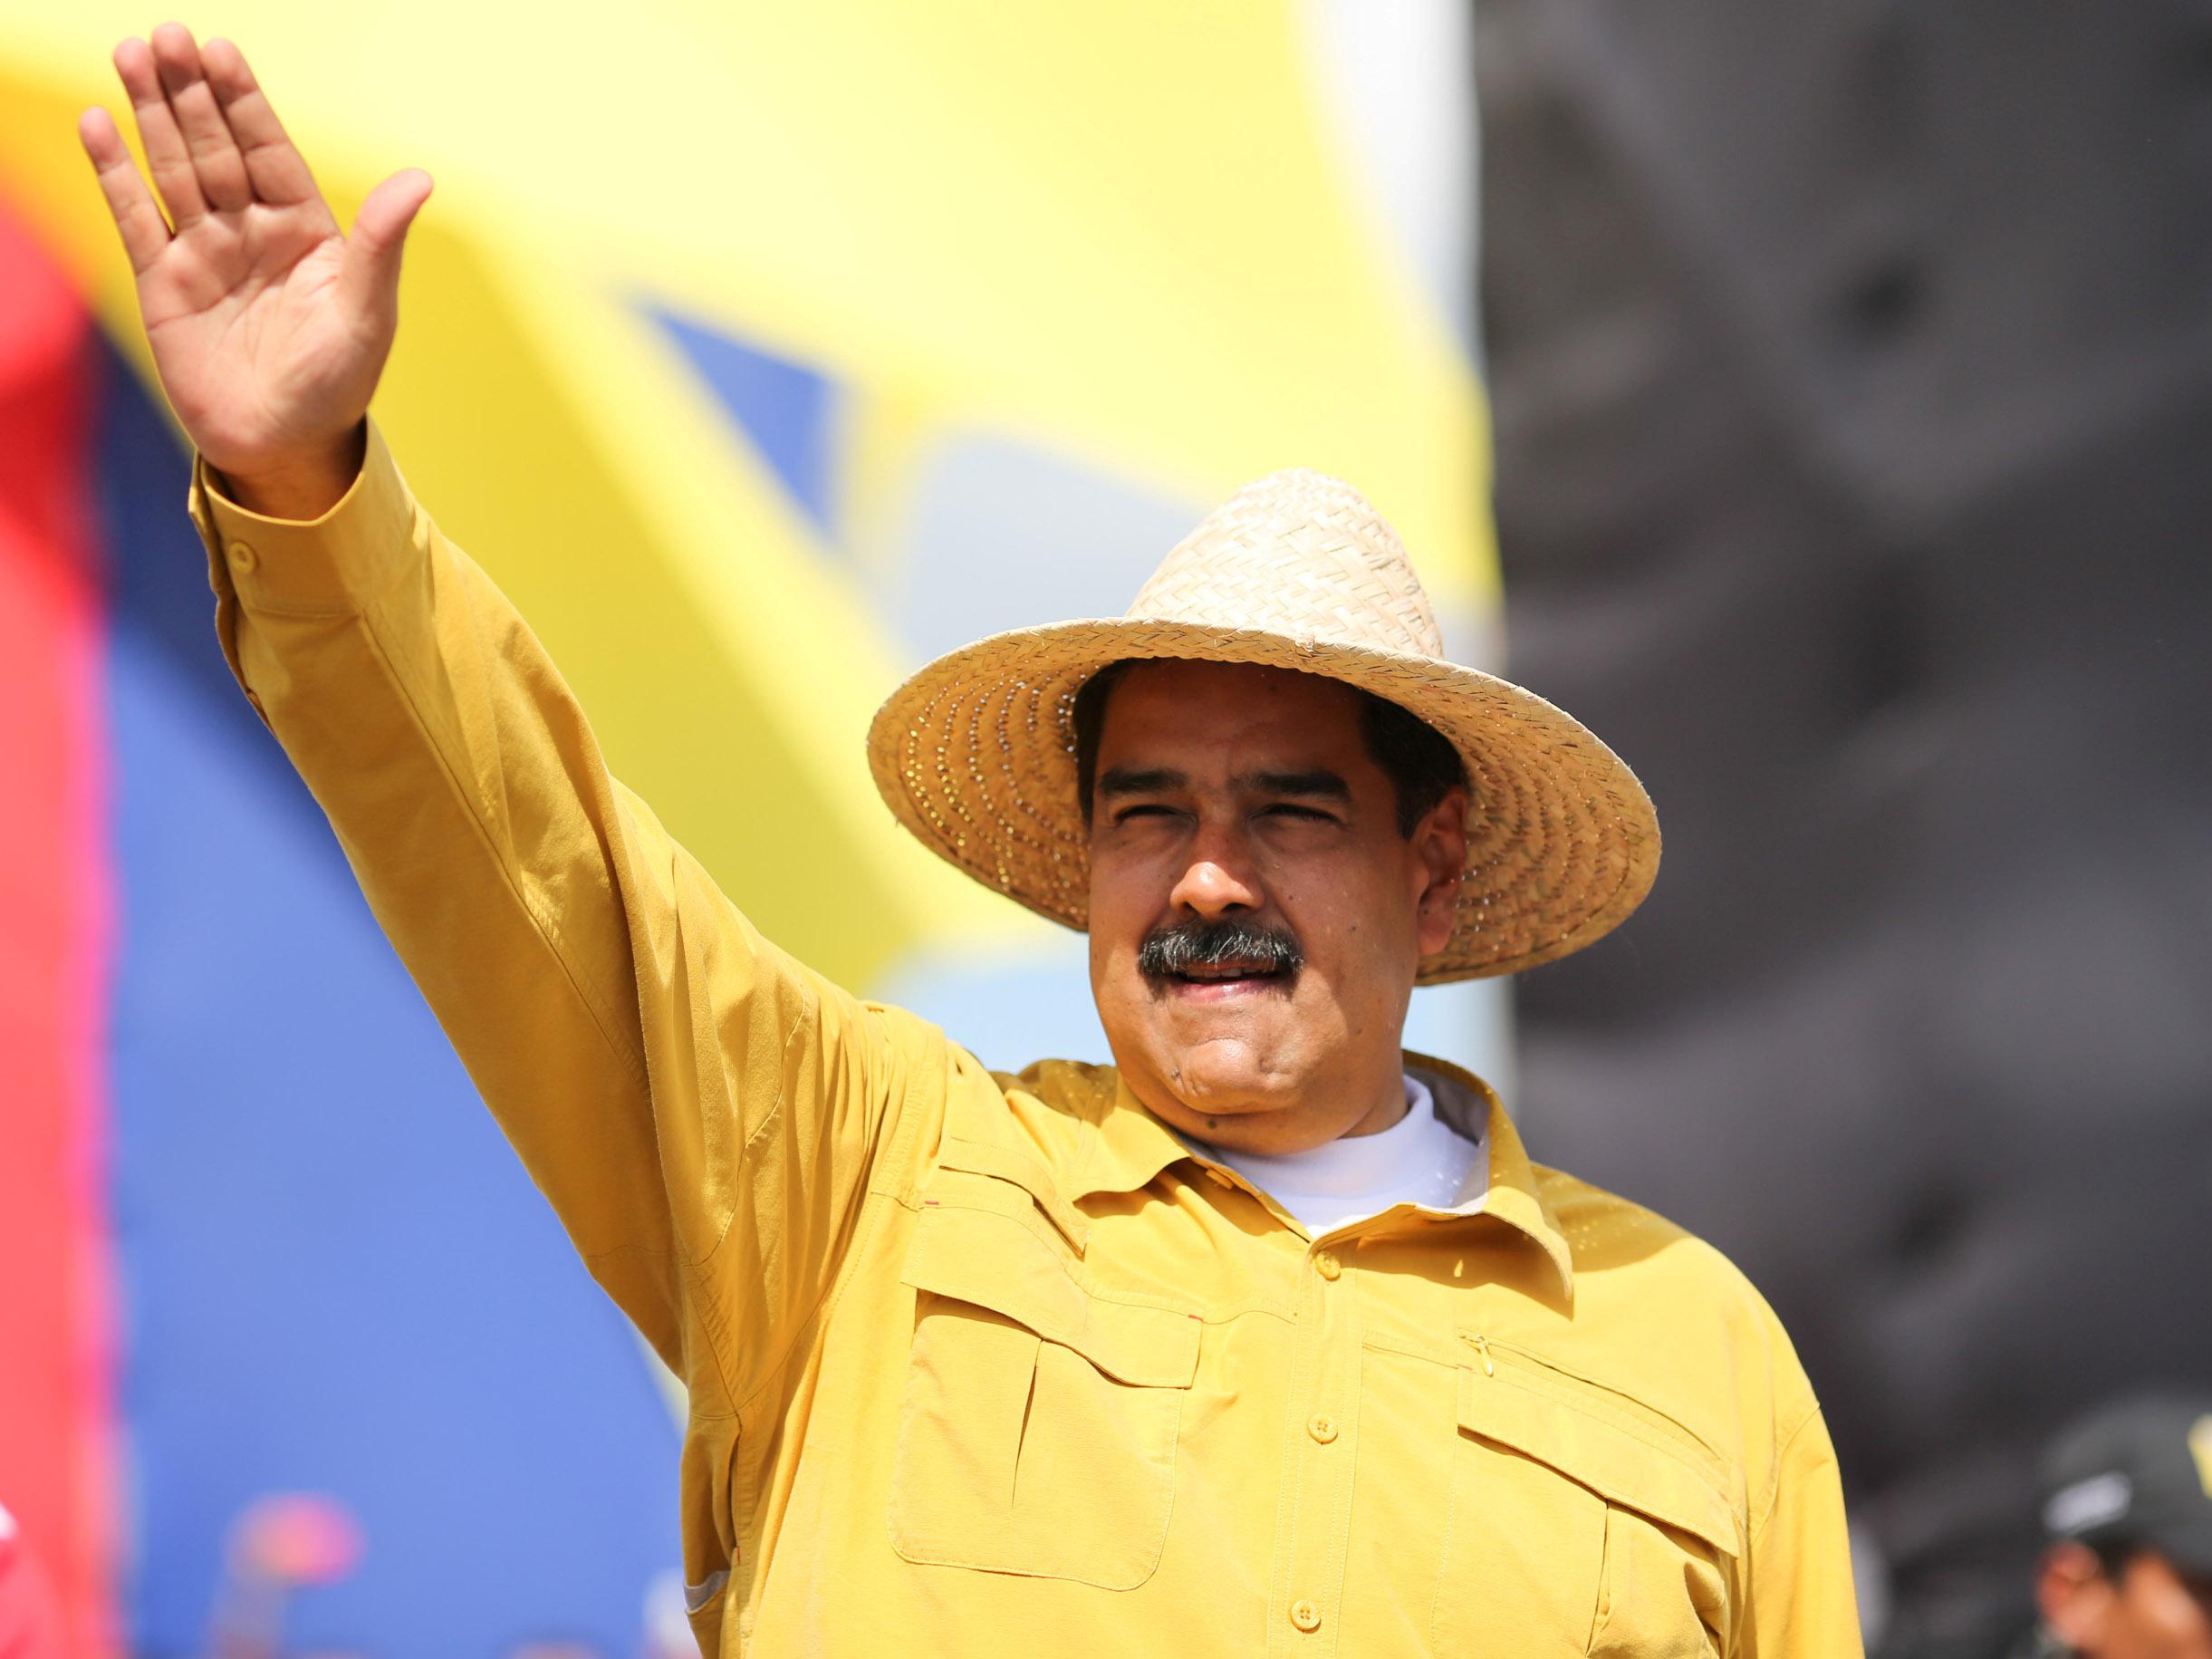 Venezuela's President Nicolas Maduro waves during a campaign rally in San Fernando